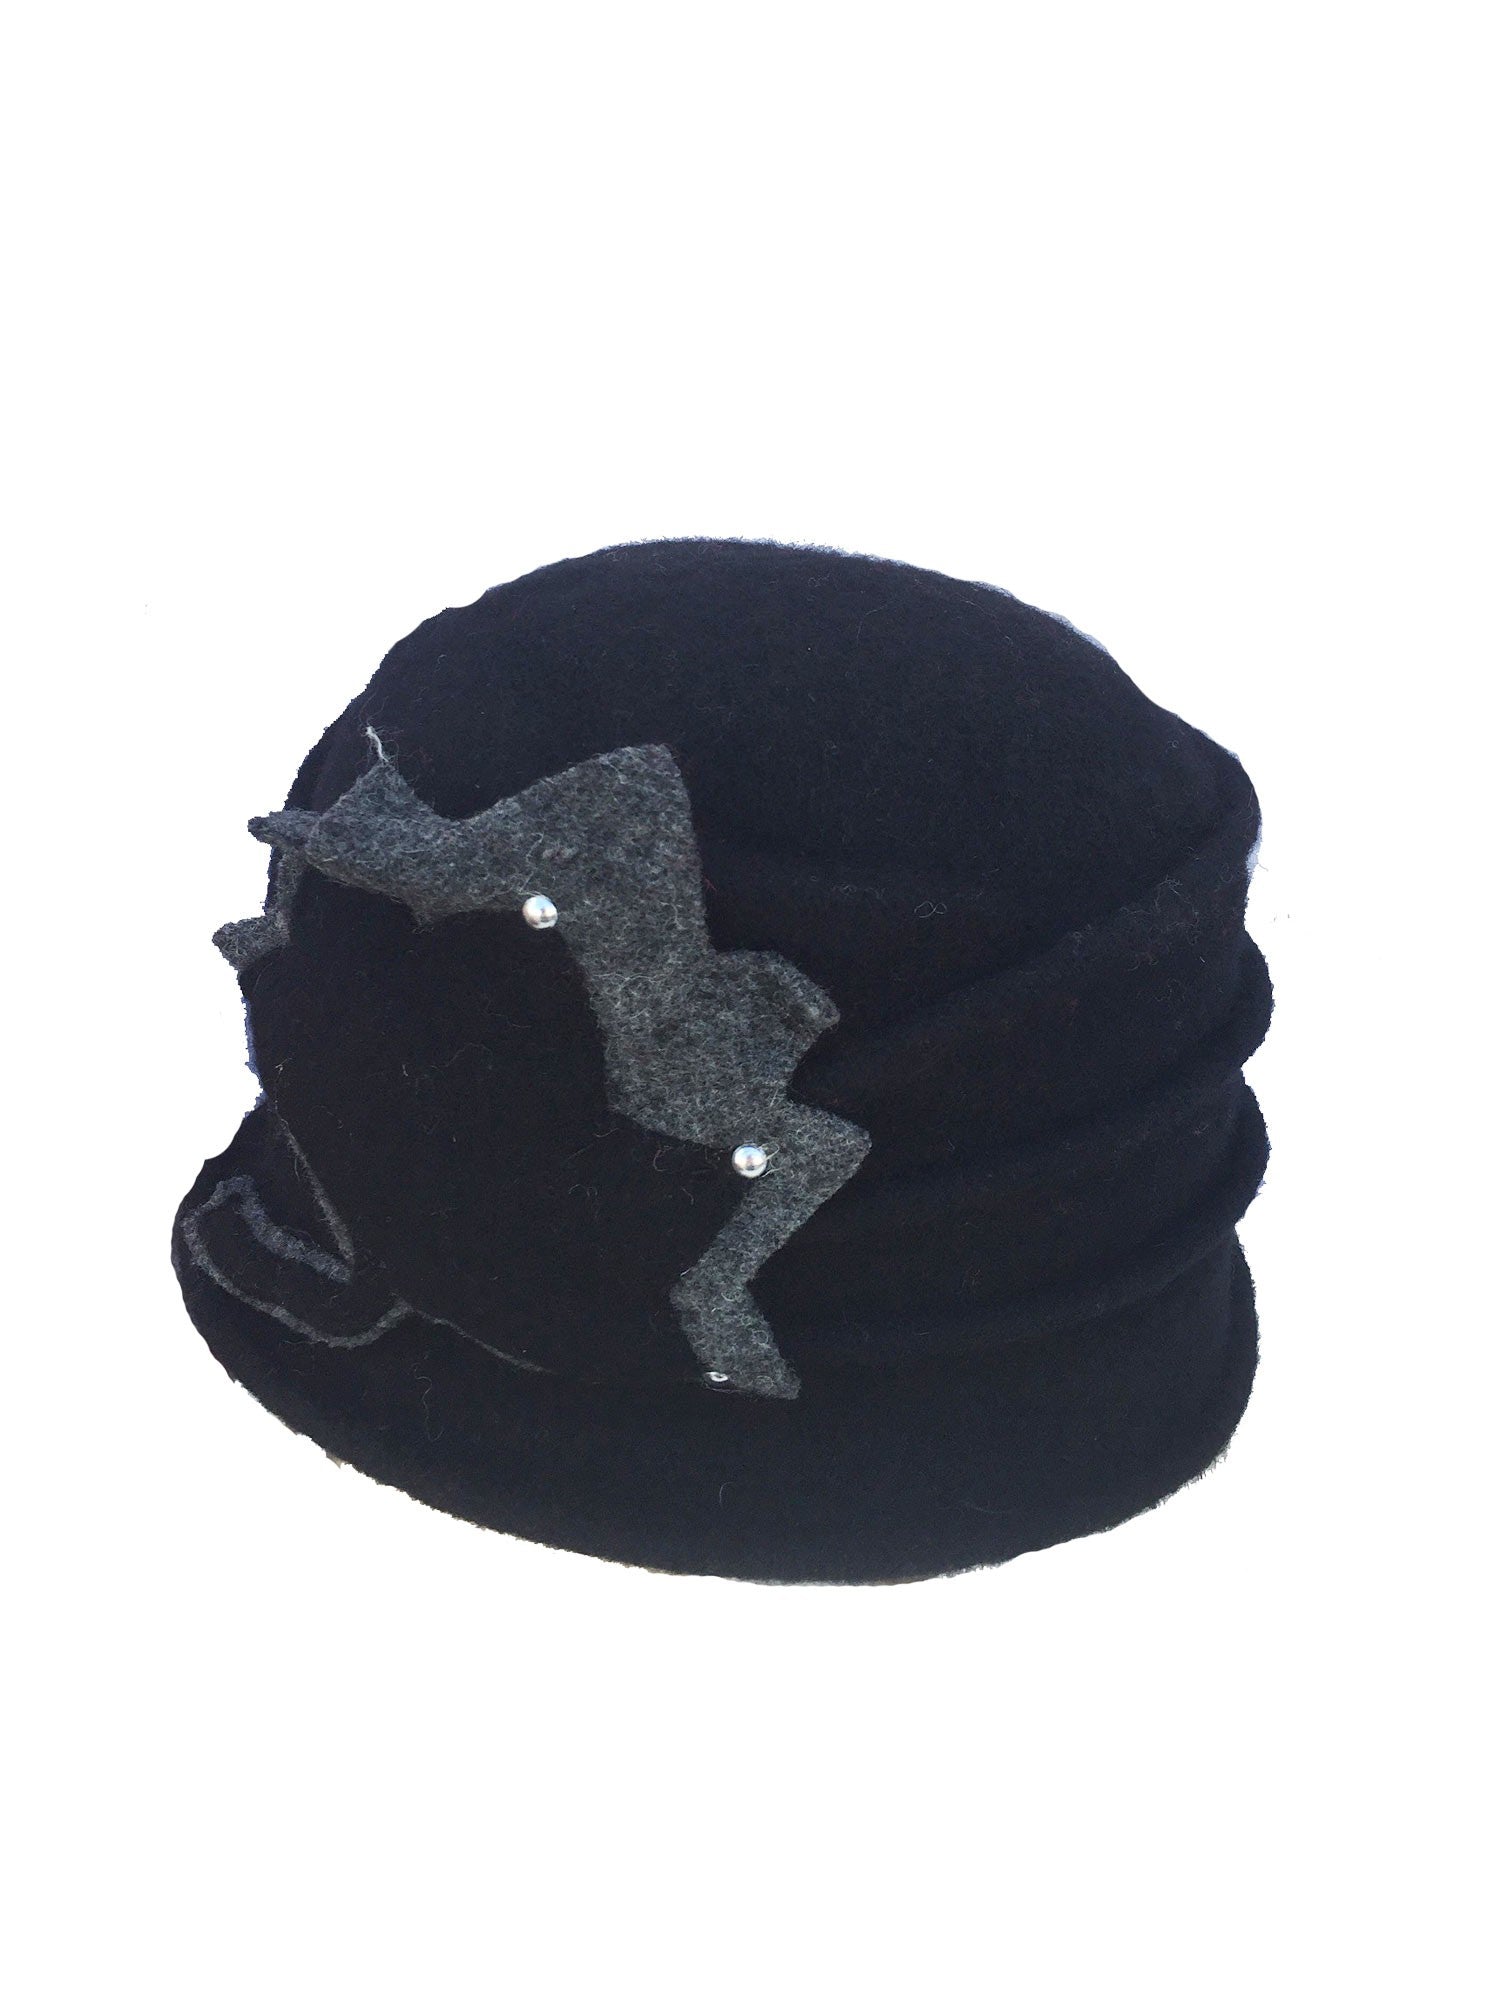 Cloche Hats for Ladies, Cloche hat for women, Cloche hats 1920s, Vintage ladies hats, Women's hats in the 1920s, Black cloche hat, Red cloche hat